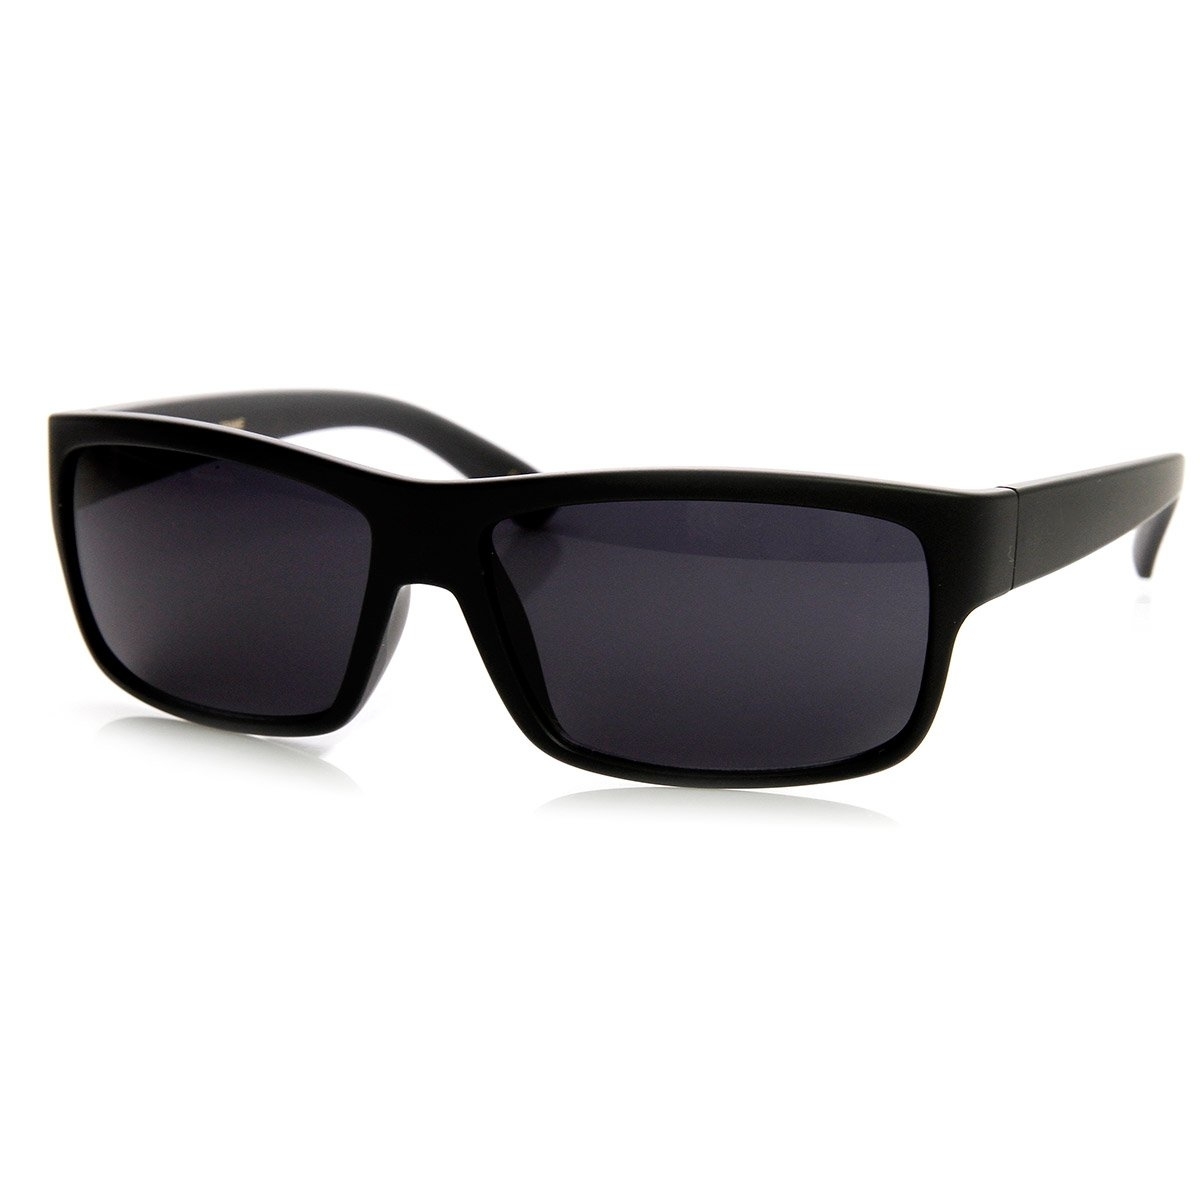 High Quality Modern Rectangular Action Sports Sunglasses - Matte-Black